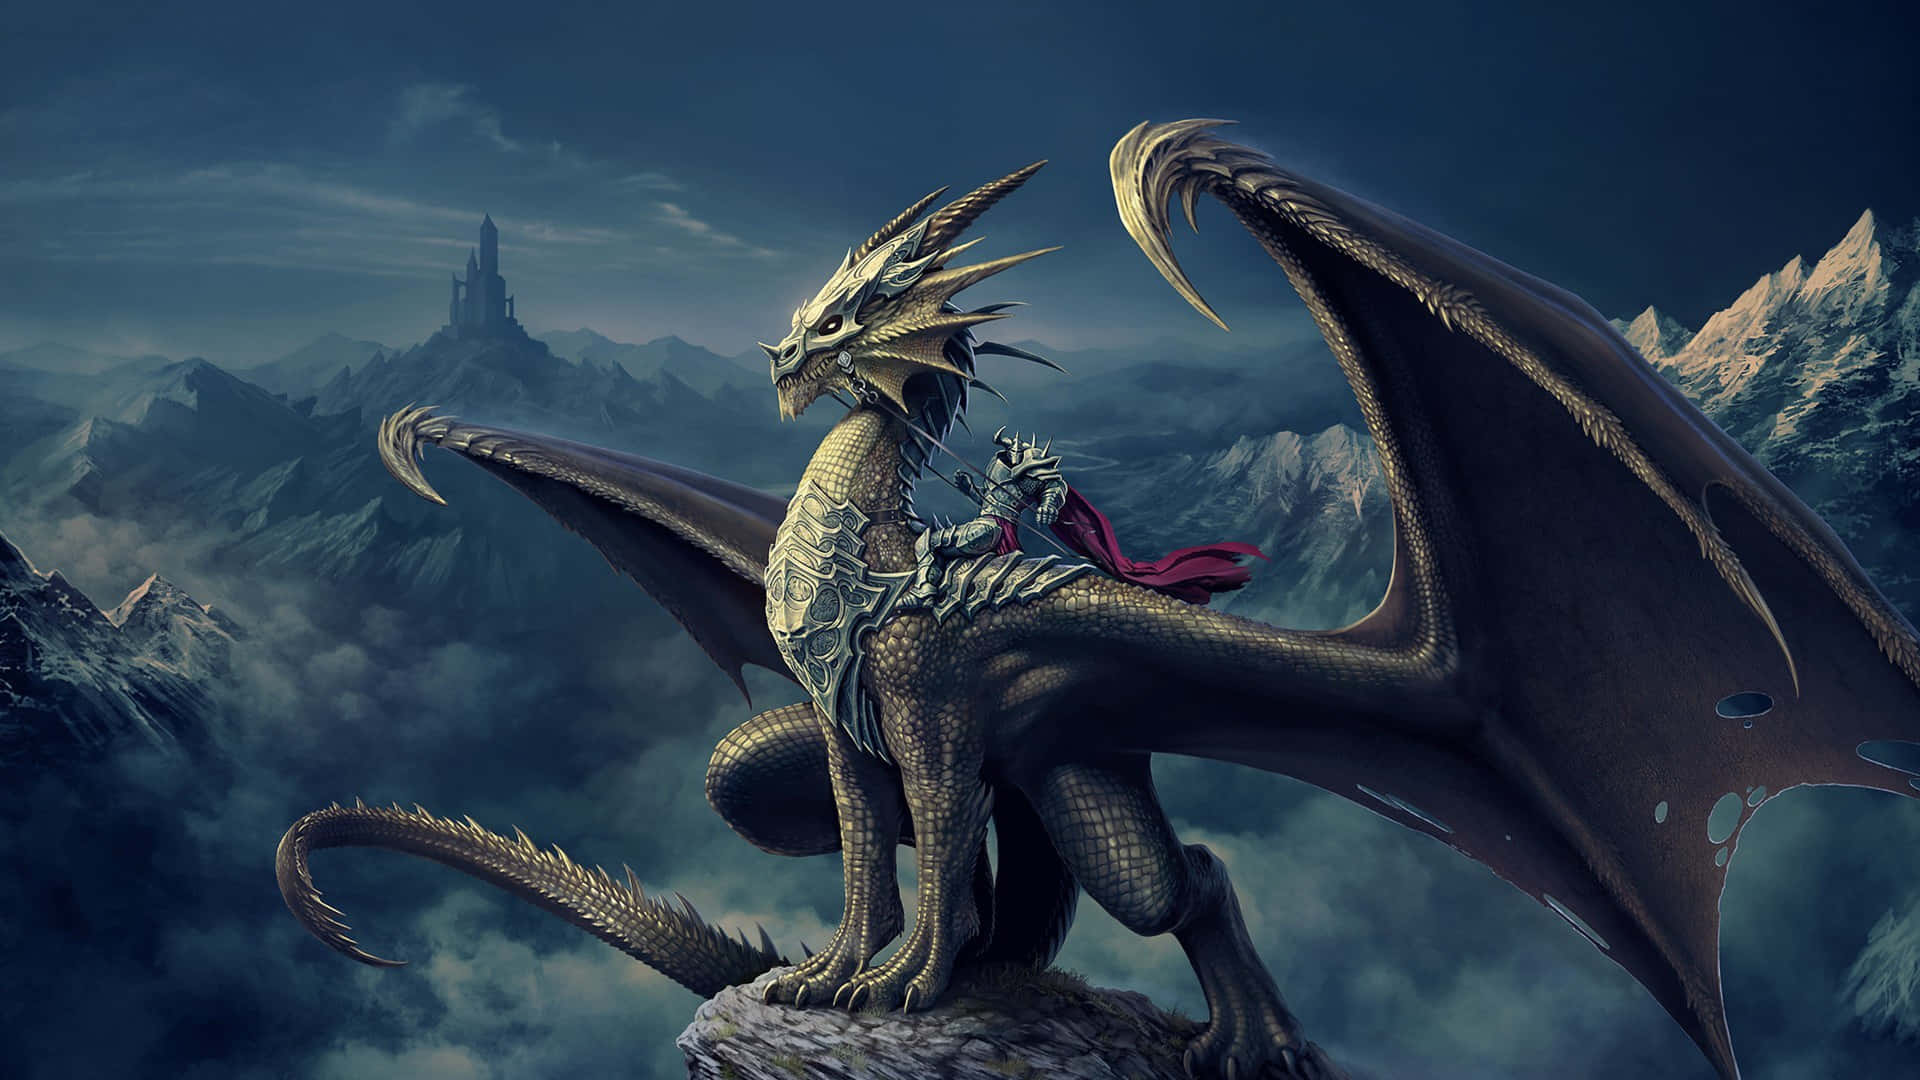 "Epic Dragon Invoking Destruction and Havoc" Wallpaper